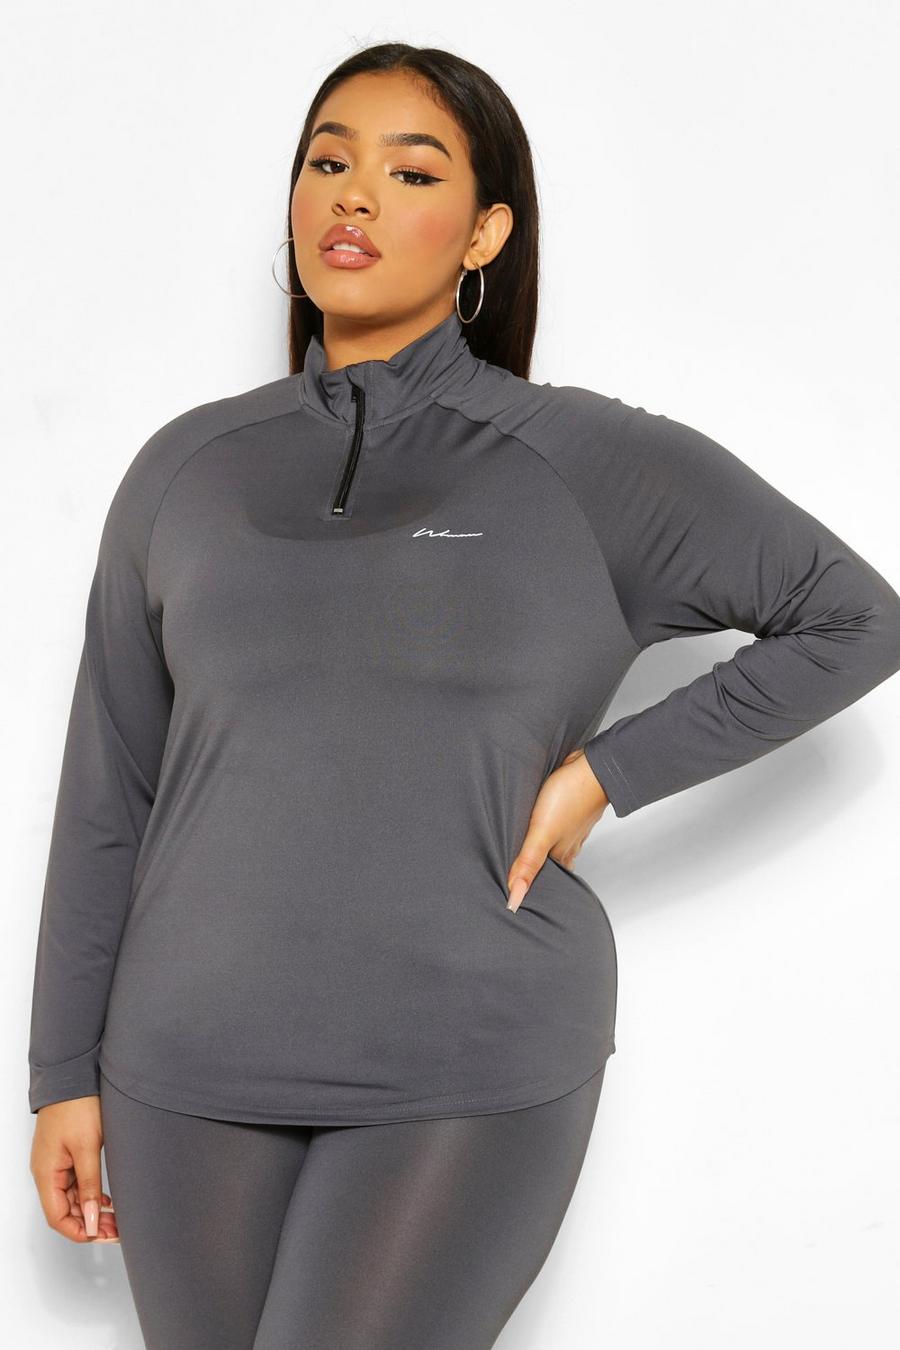 Charcoal gris Plus Activewear 'Woman' Raglan Funnel Neck Gym Top image number 1